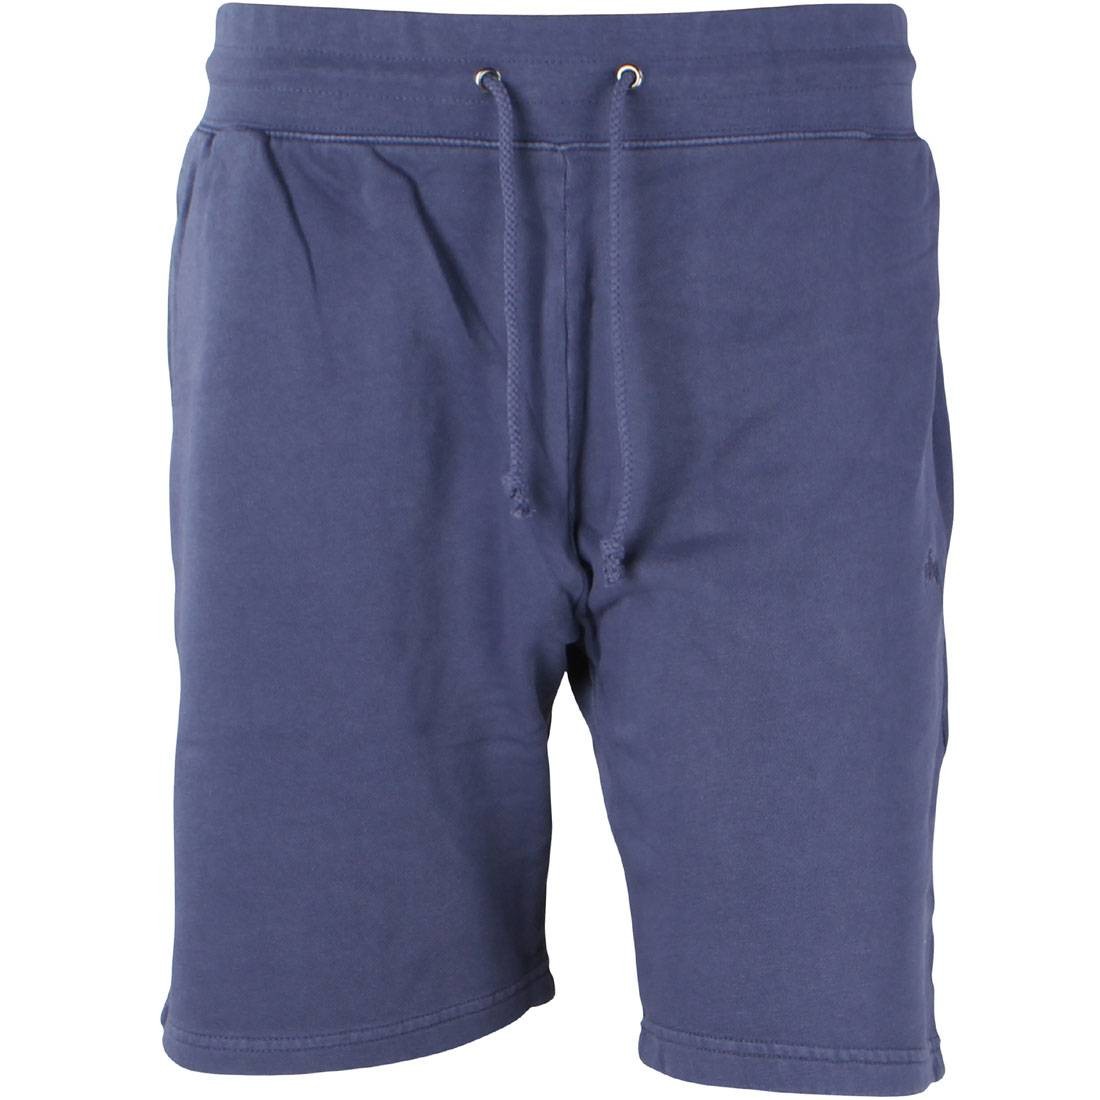 Stussy Men Tonal Stock Shorts blue indigo